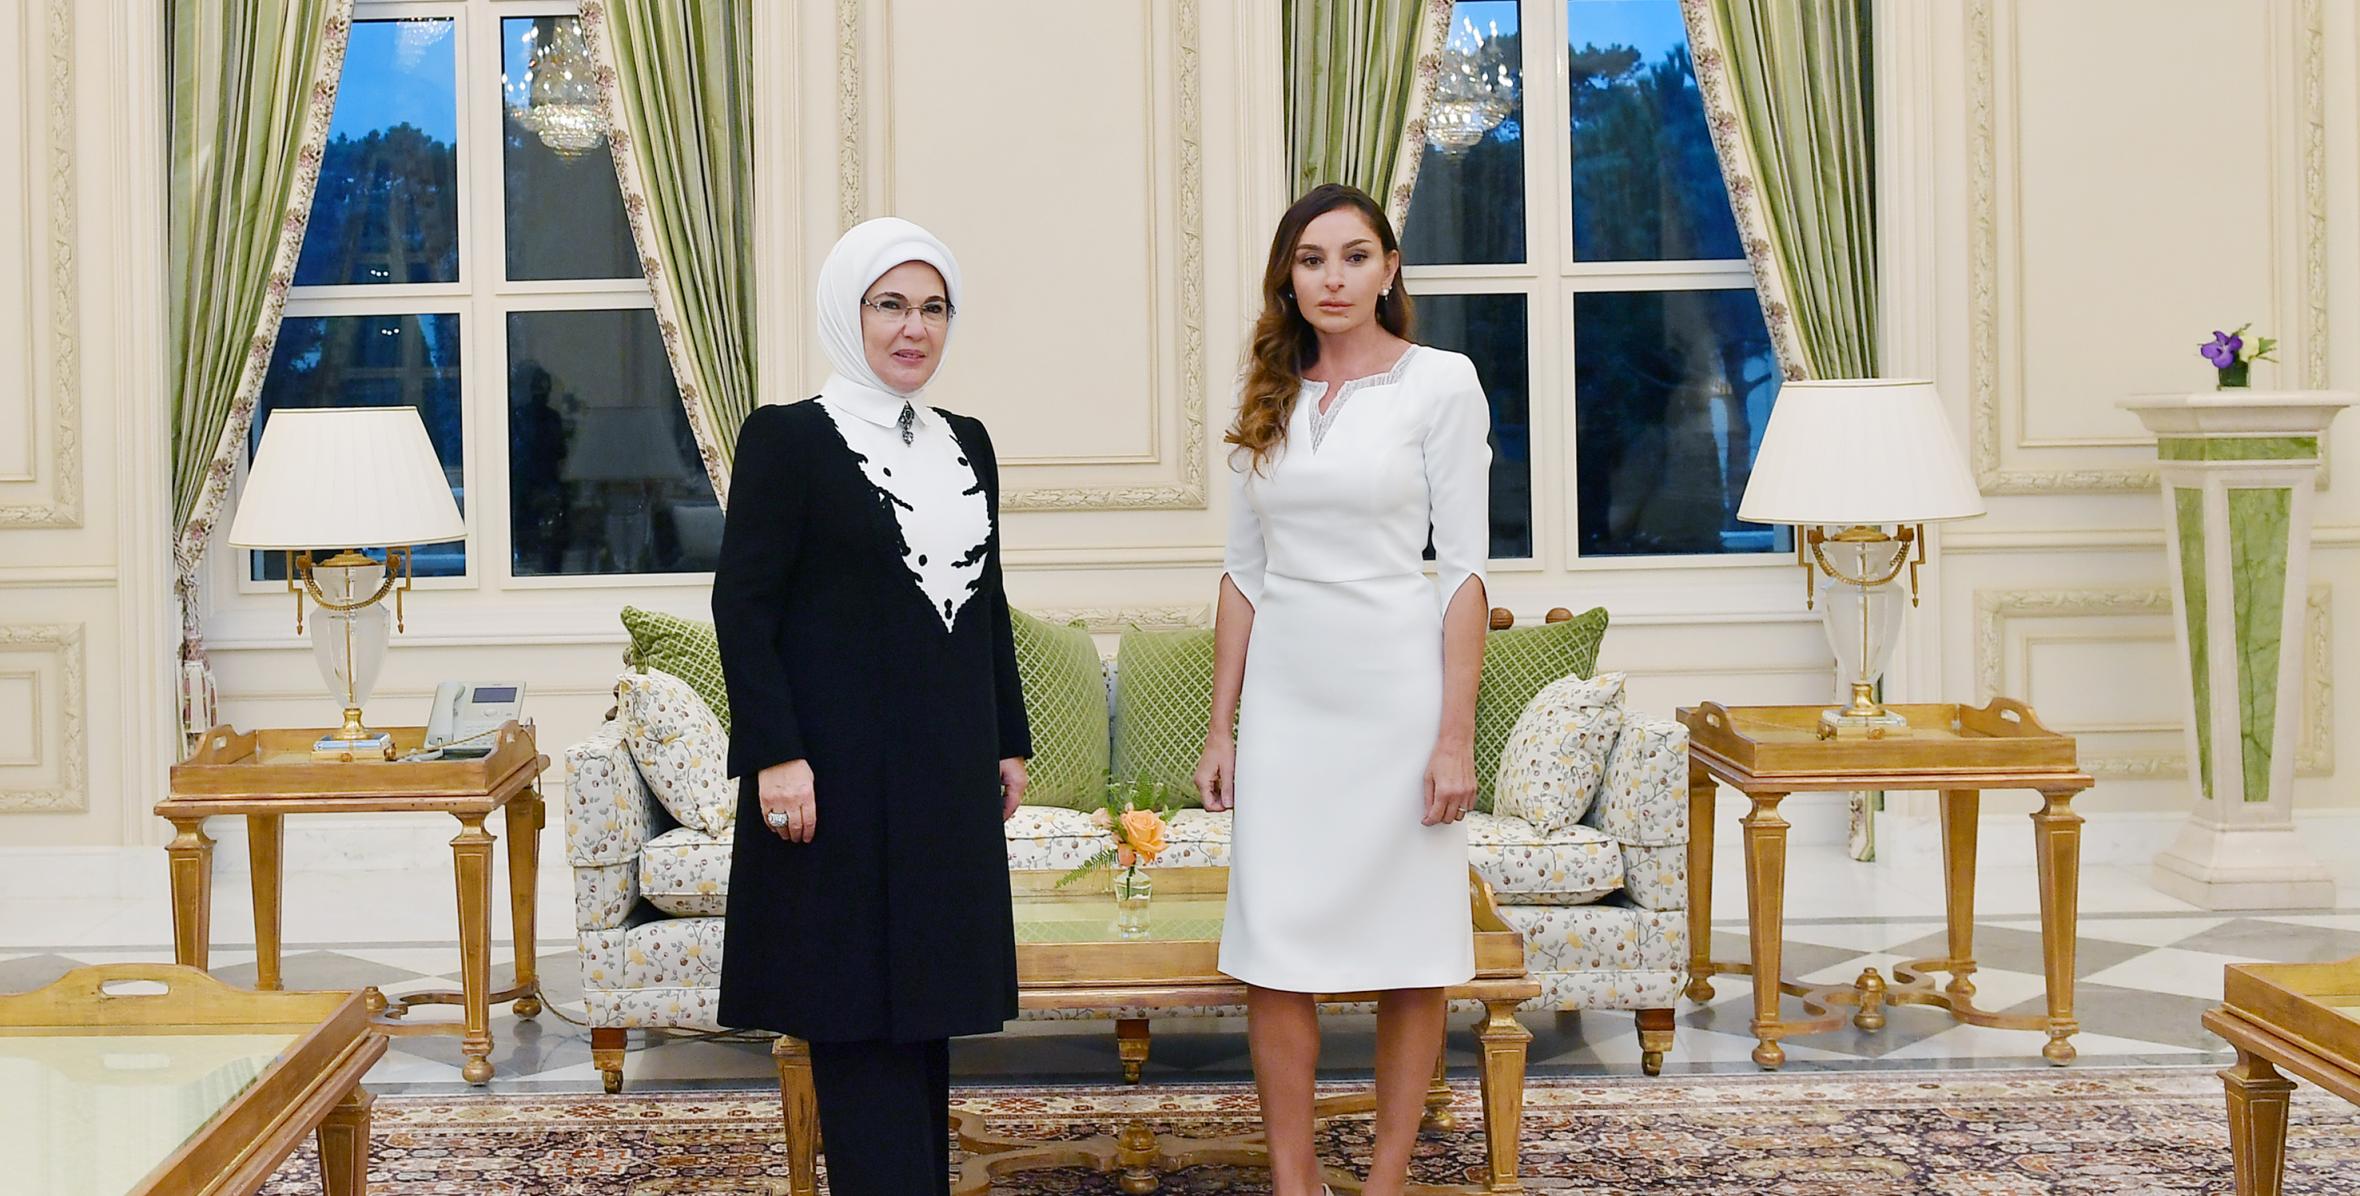 The First Ladies of Azerbaijan and Turkey met